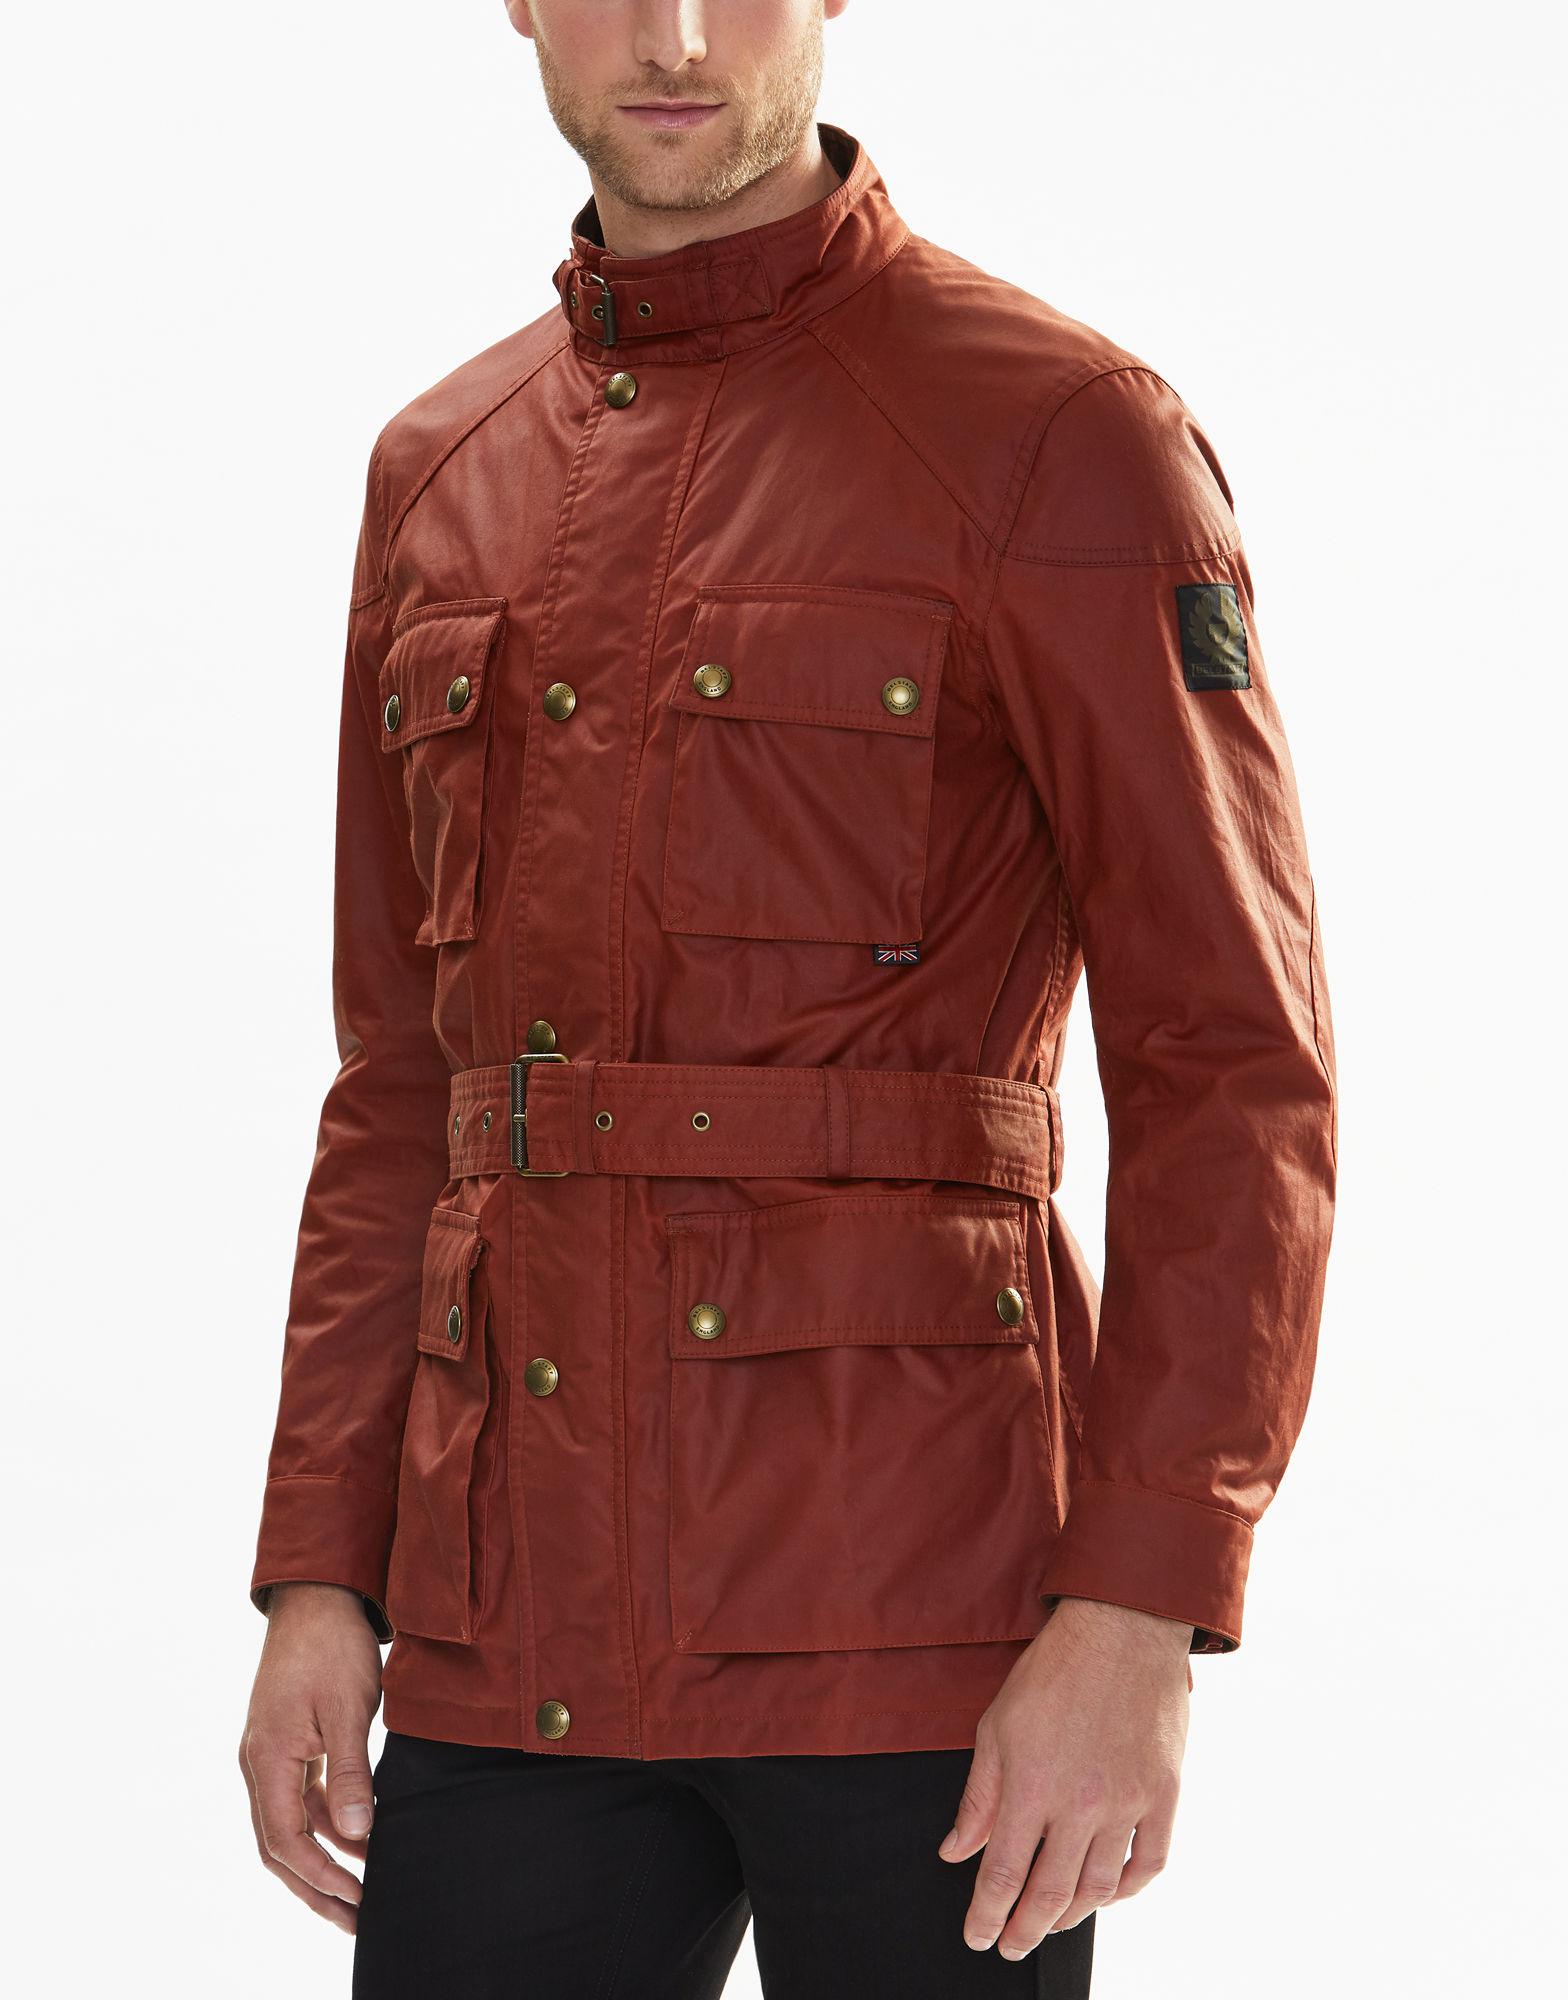 Belstaff Cotton Roadmaster Jacket in Red for Men - Lyst